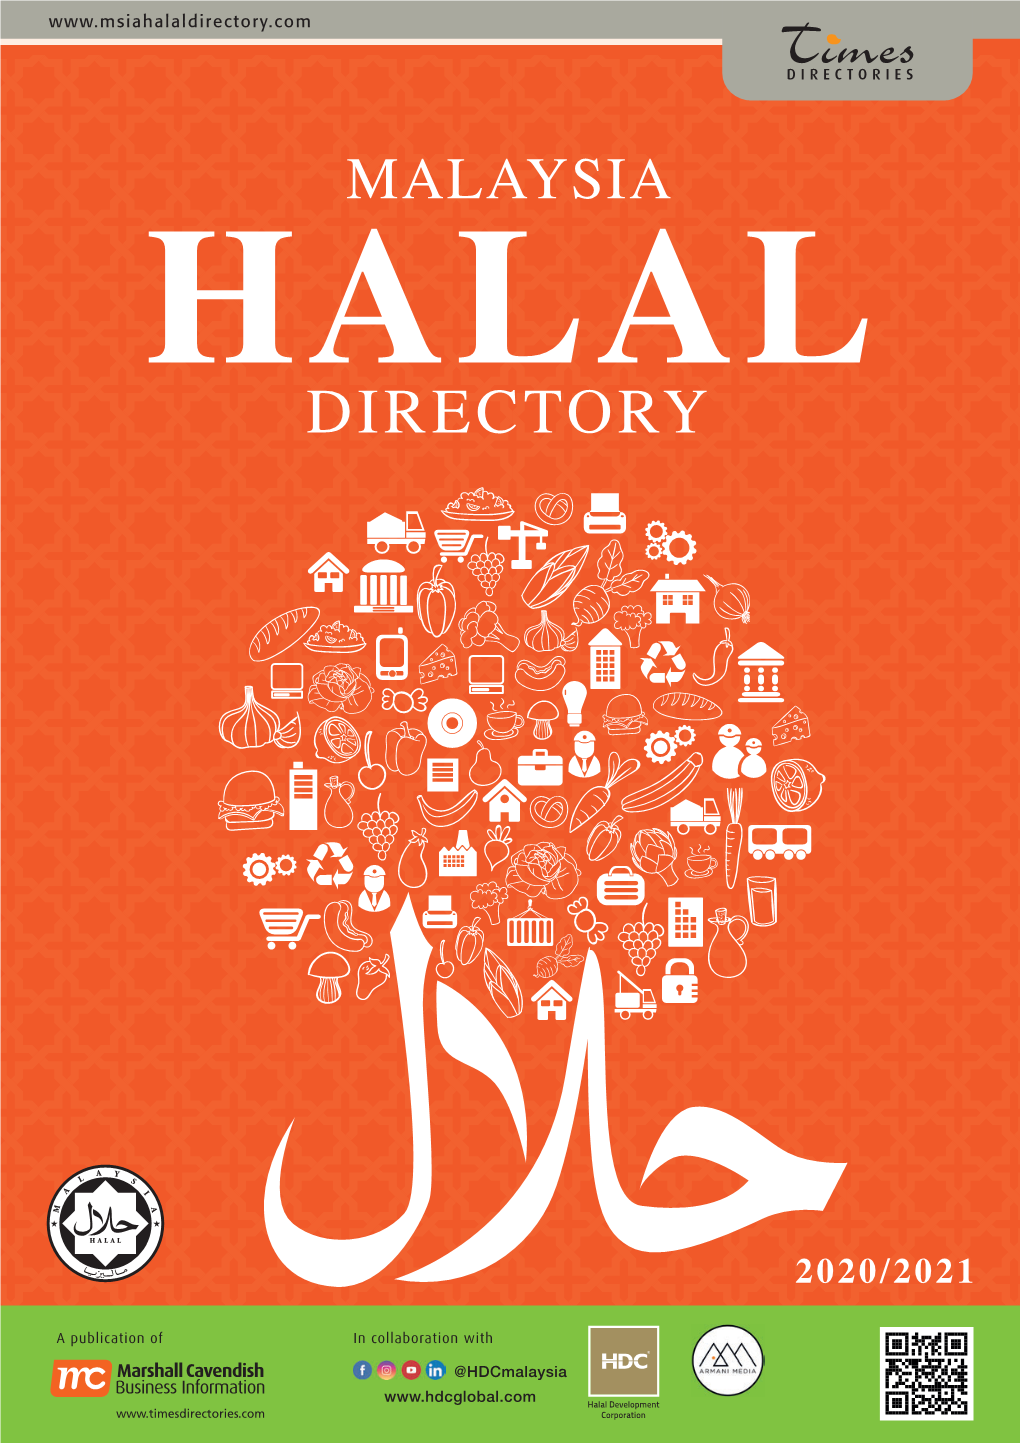 Malaysia Halal Directory 2020/2021